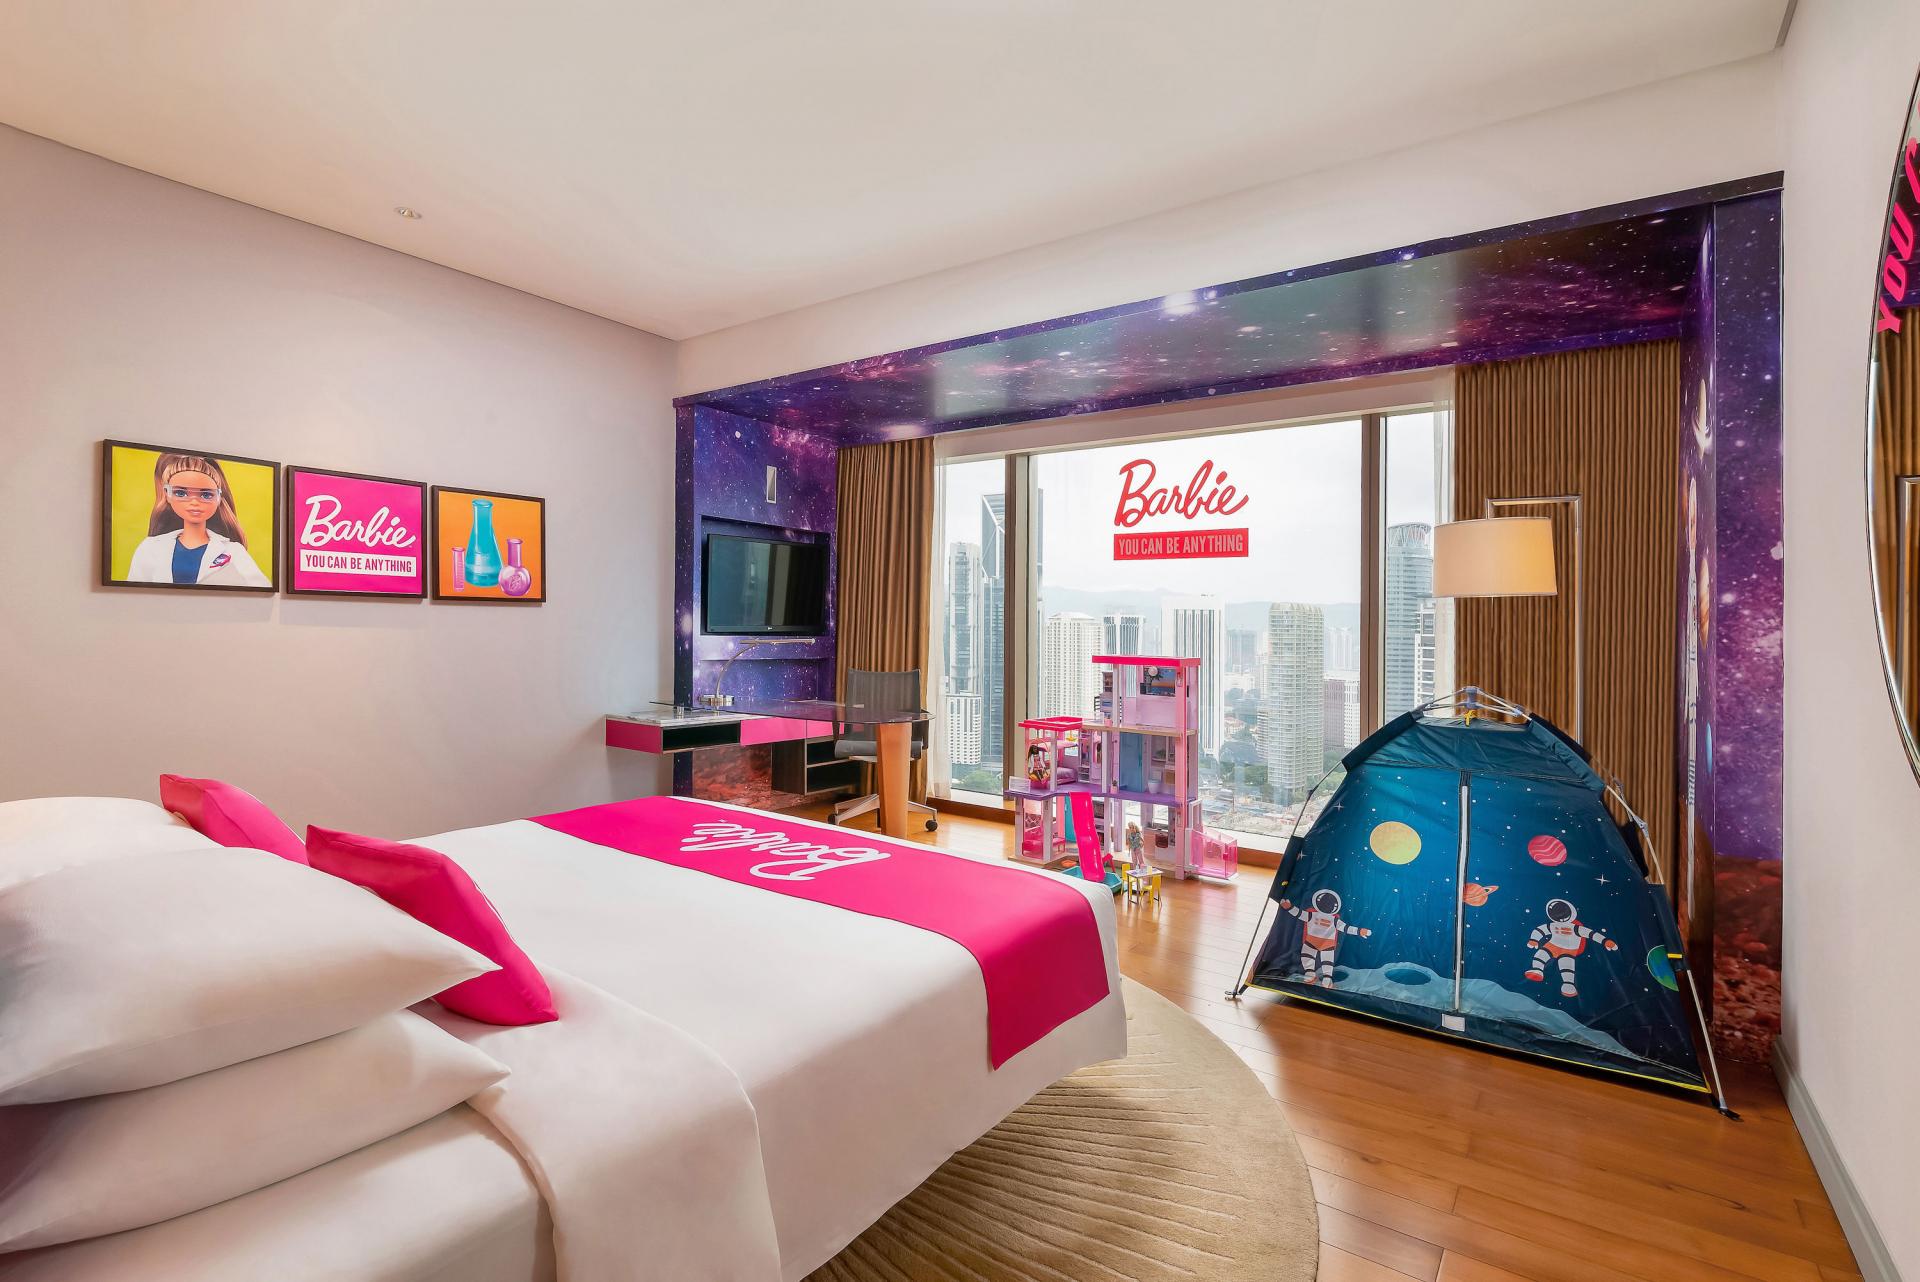 Step into a Barbie world at Grand Hyatt Kuala Lumpur's themed staycation